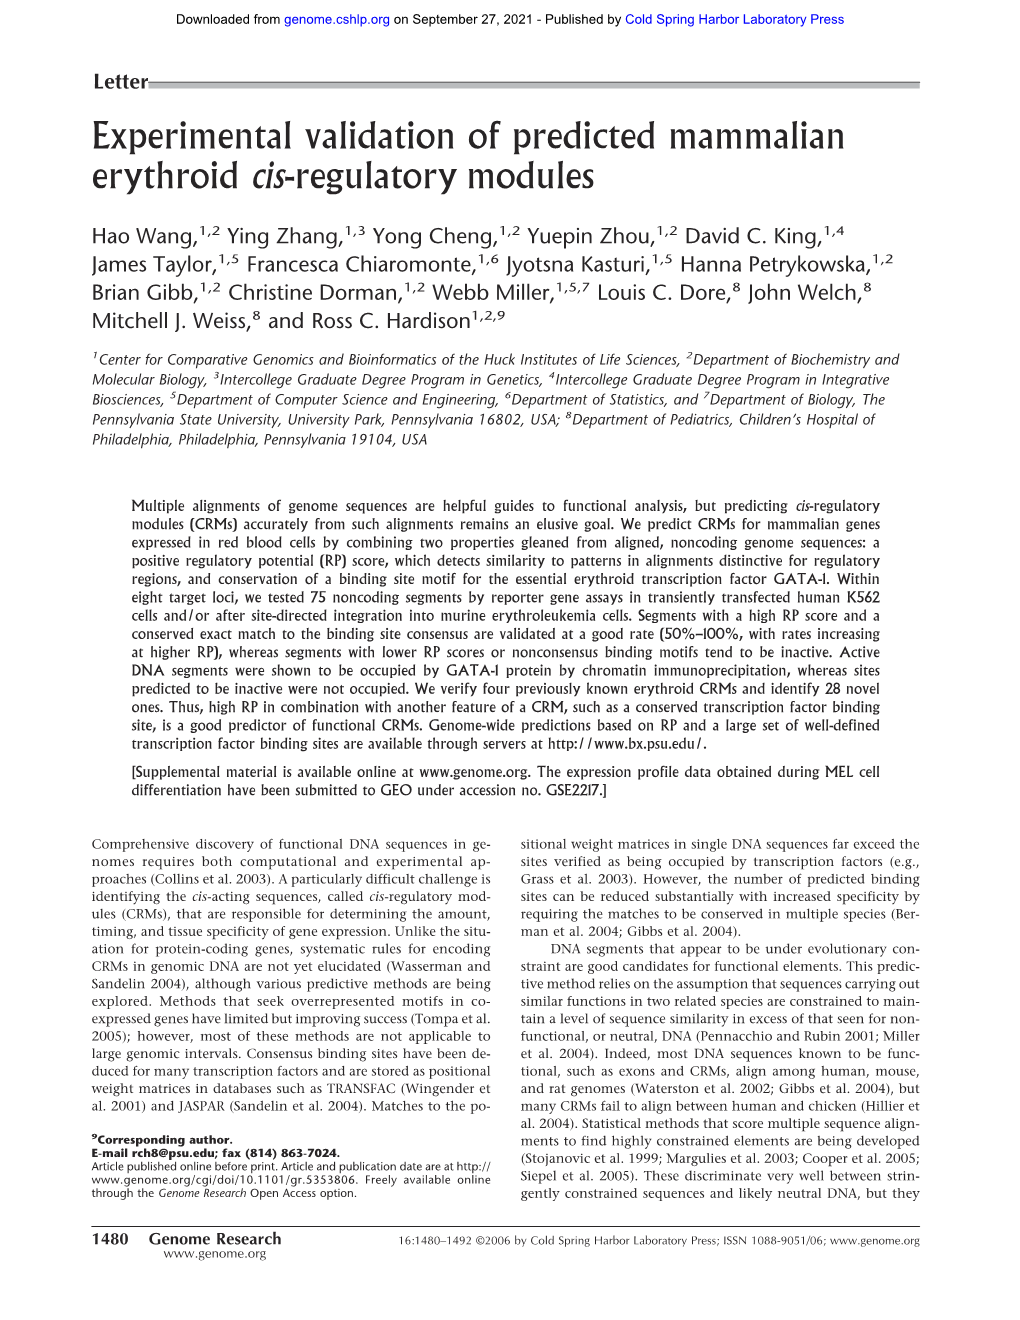 Experimental Validation of Predicted Mammalian Erythroid Cis-Regulatory Modules